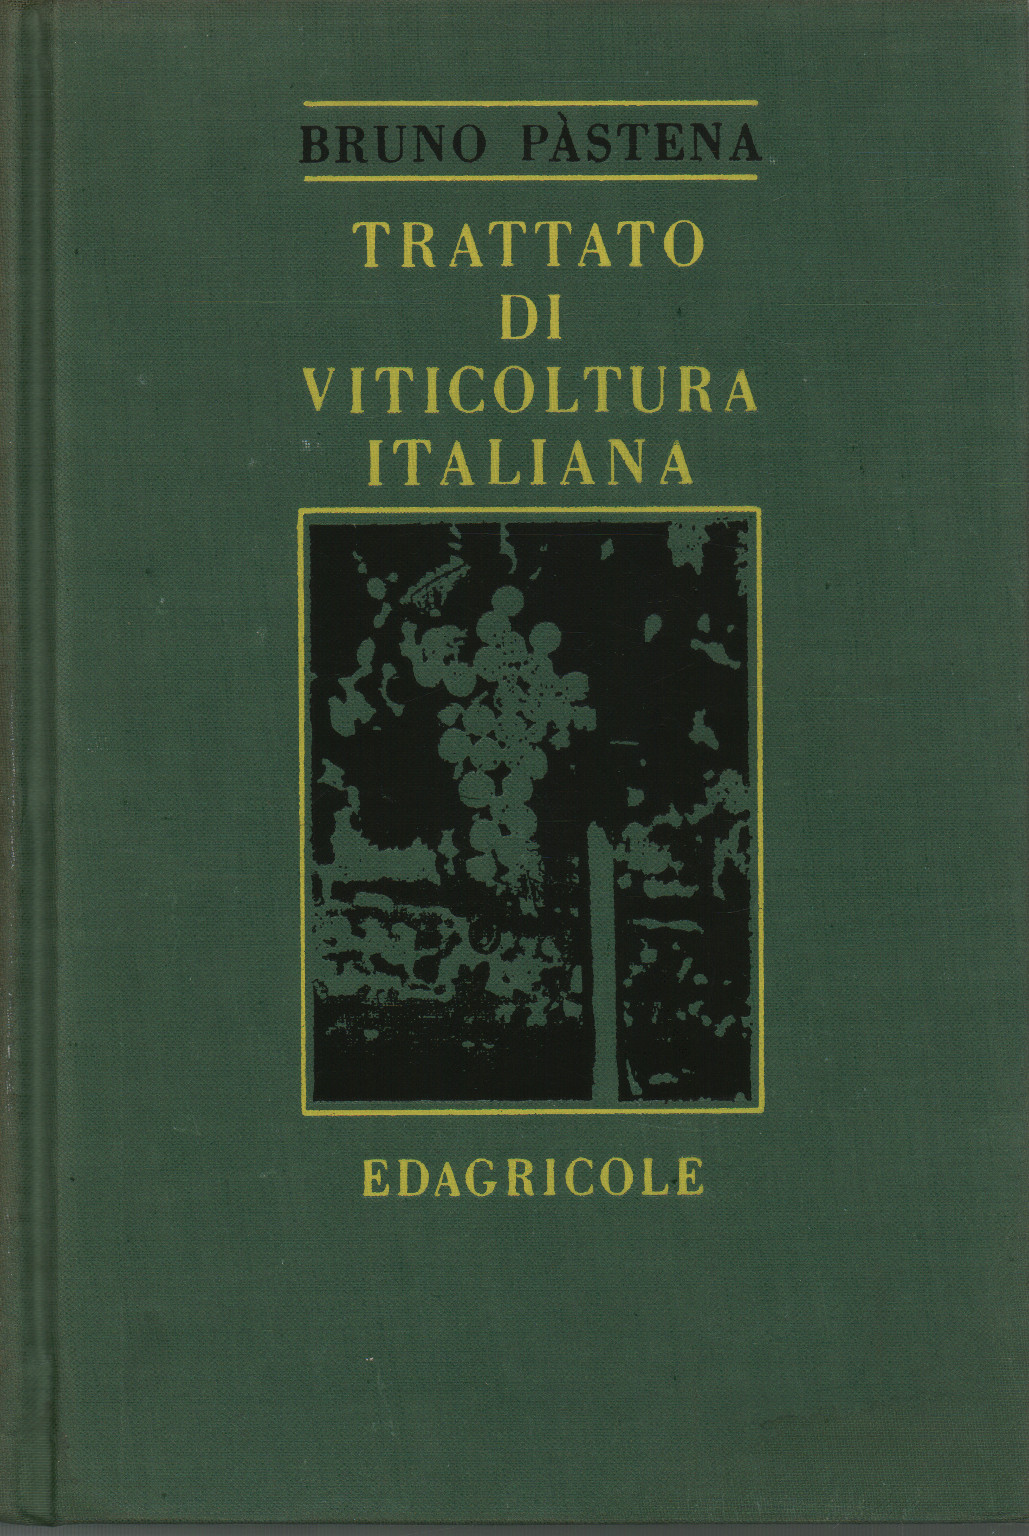 Tratado de viticultura italiana, s.a.